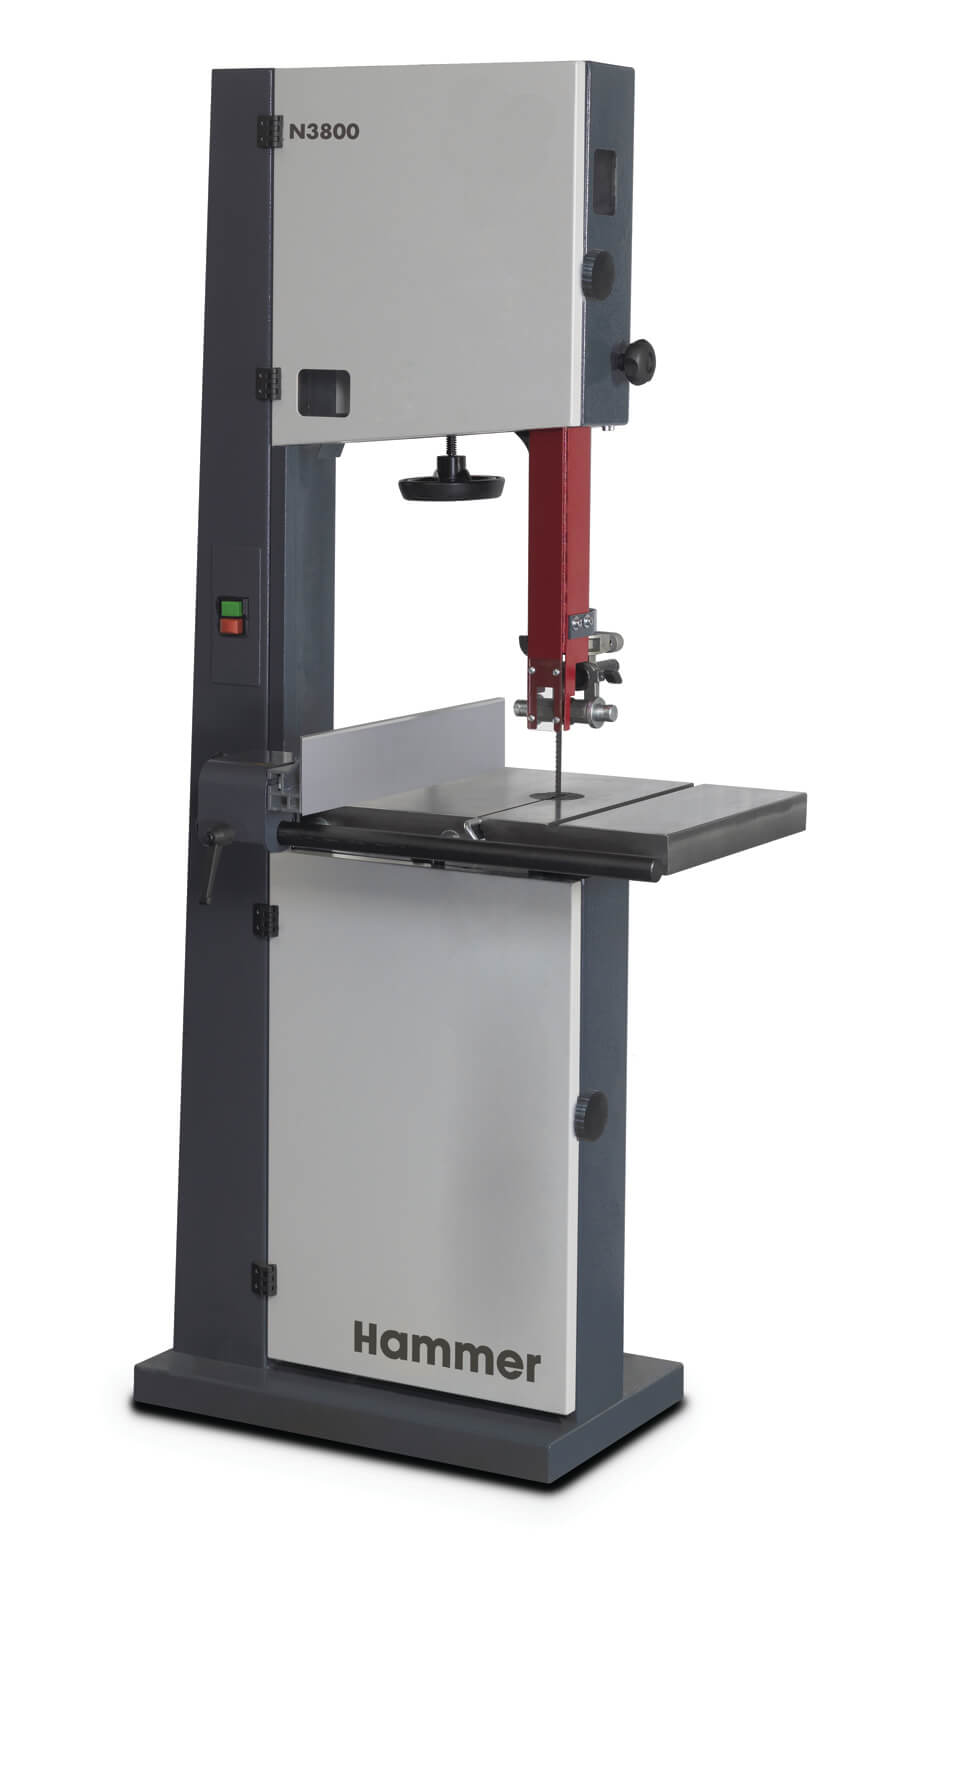 Hammer Bandsaw N3800